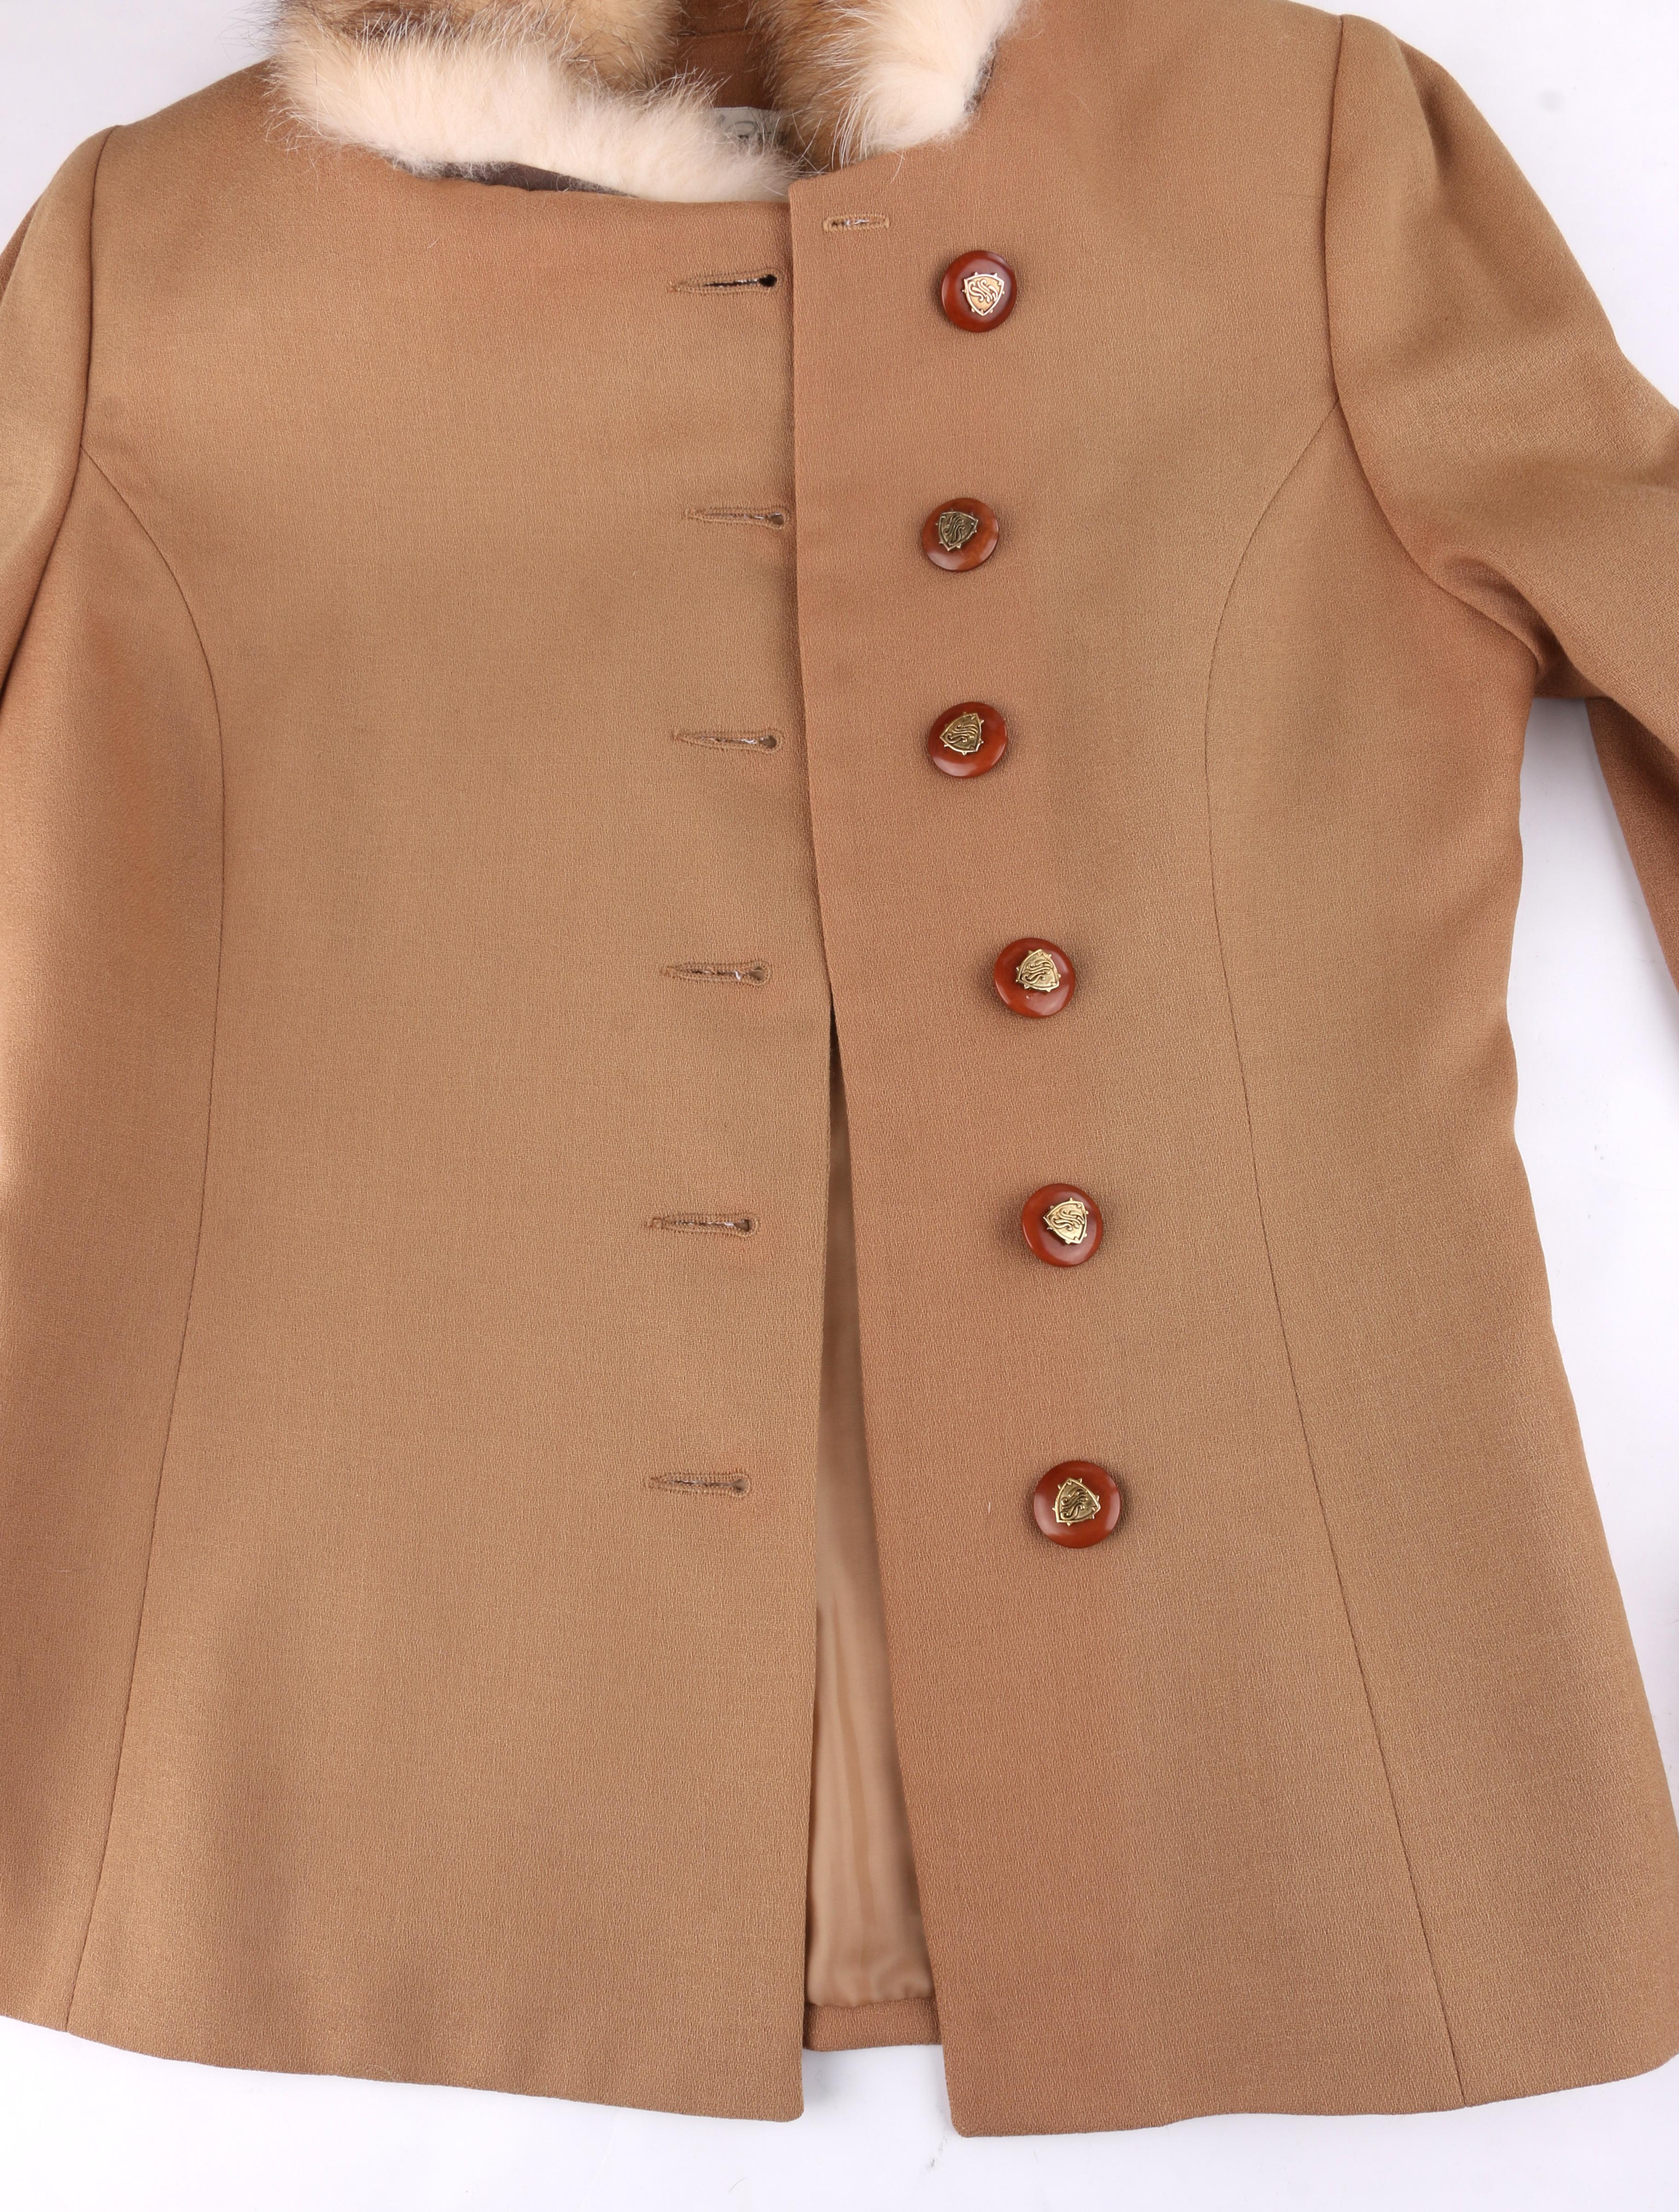 LILLIE RUBIN c.1980’s Peruvian Camel Red Fox Fur Wool Blazer Jacket Skirt Set  5